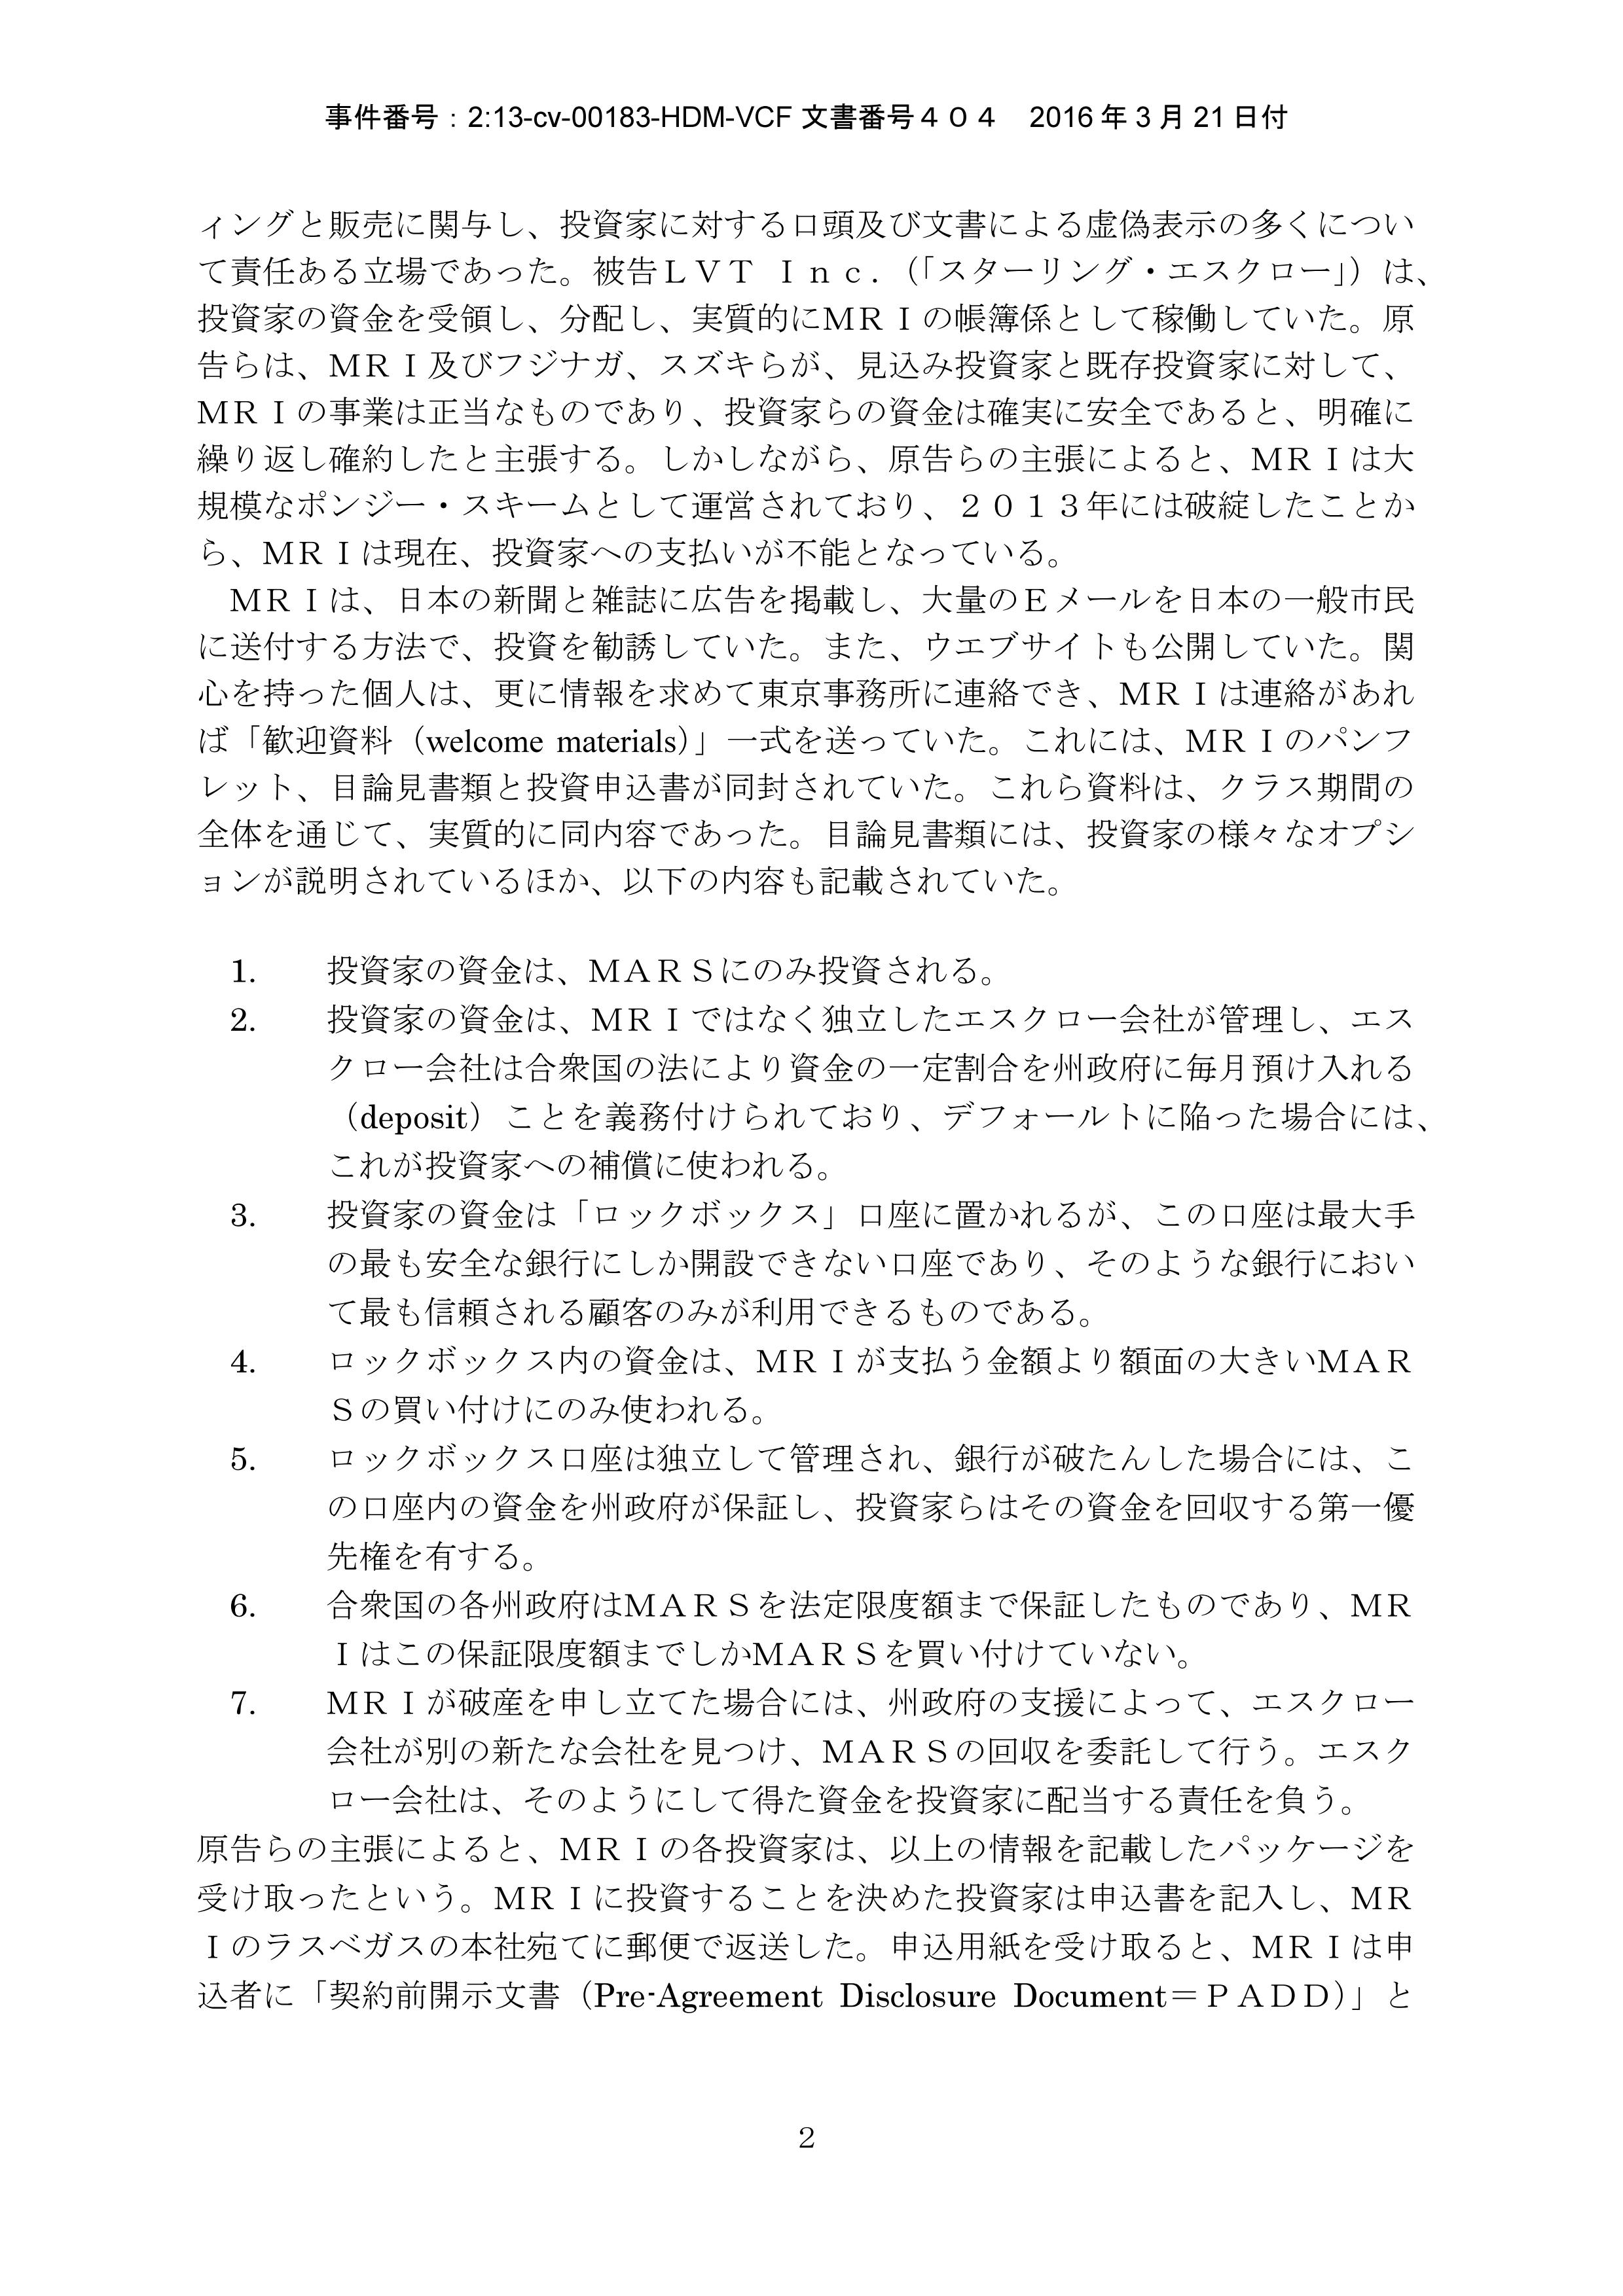 CA_Dkt 404_Order Granting Class Certification_Japanese translation_02